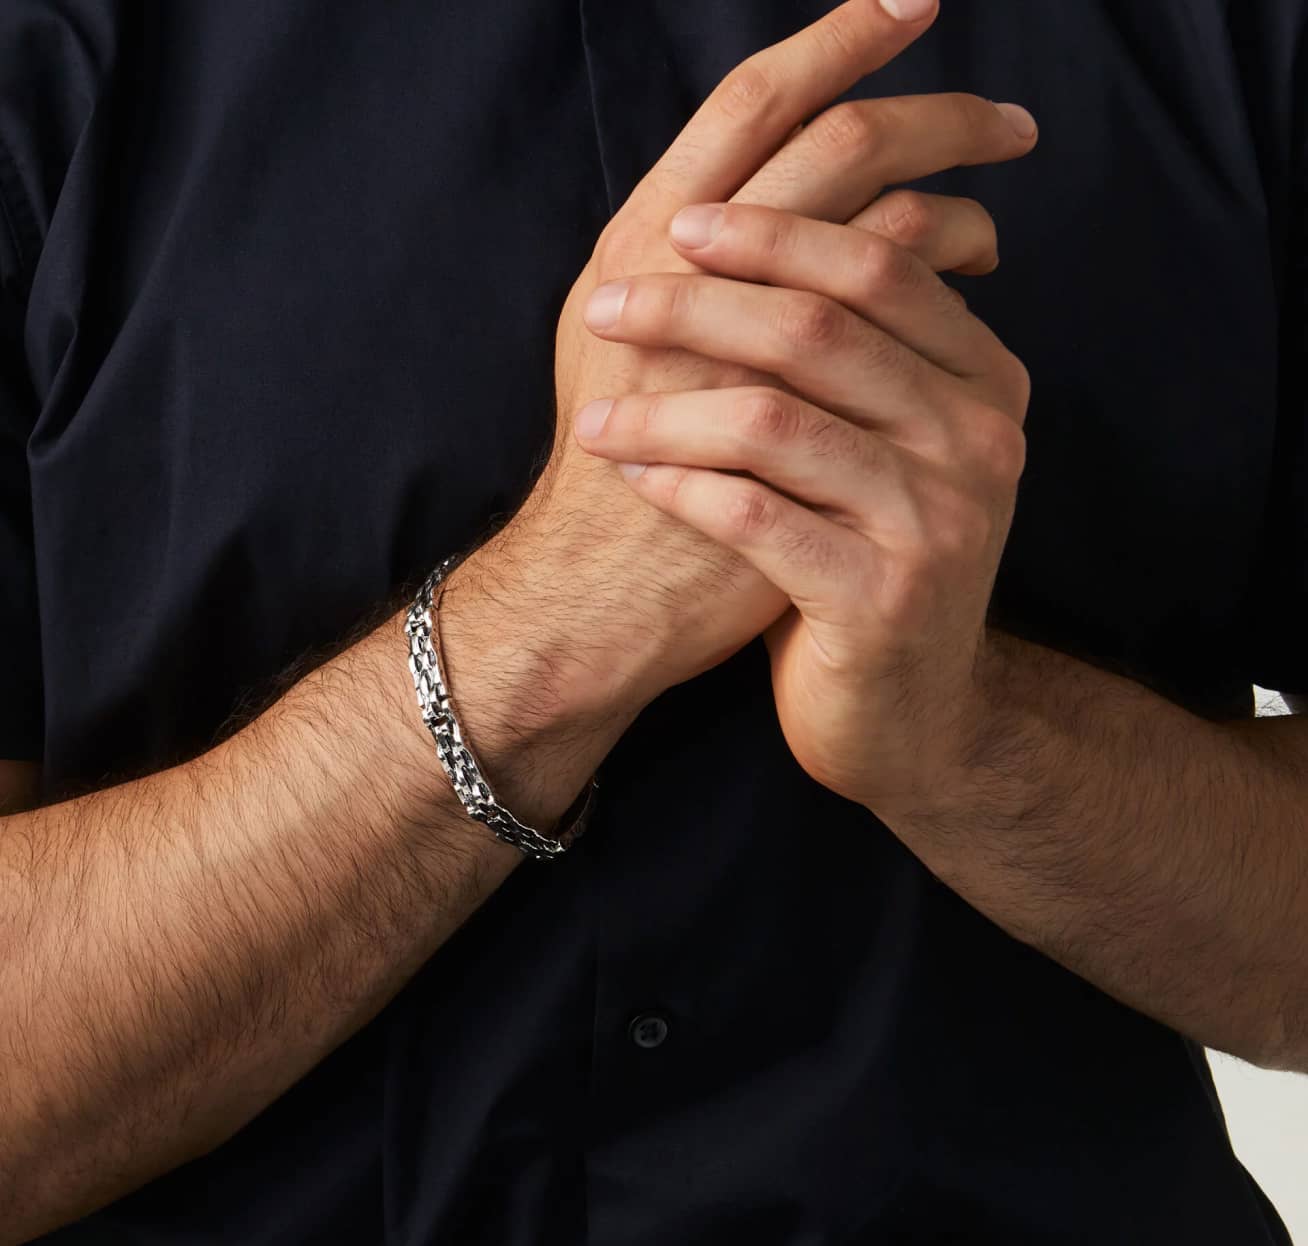 Mann mit silbernem Armband, schwarzes Hemd.